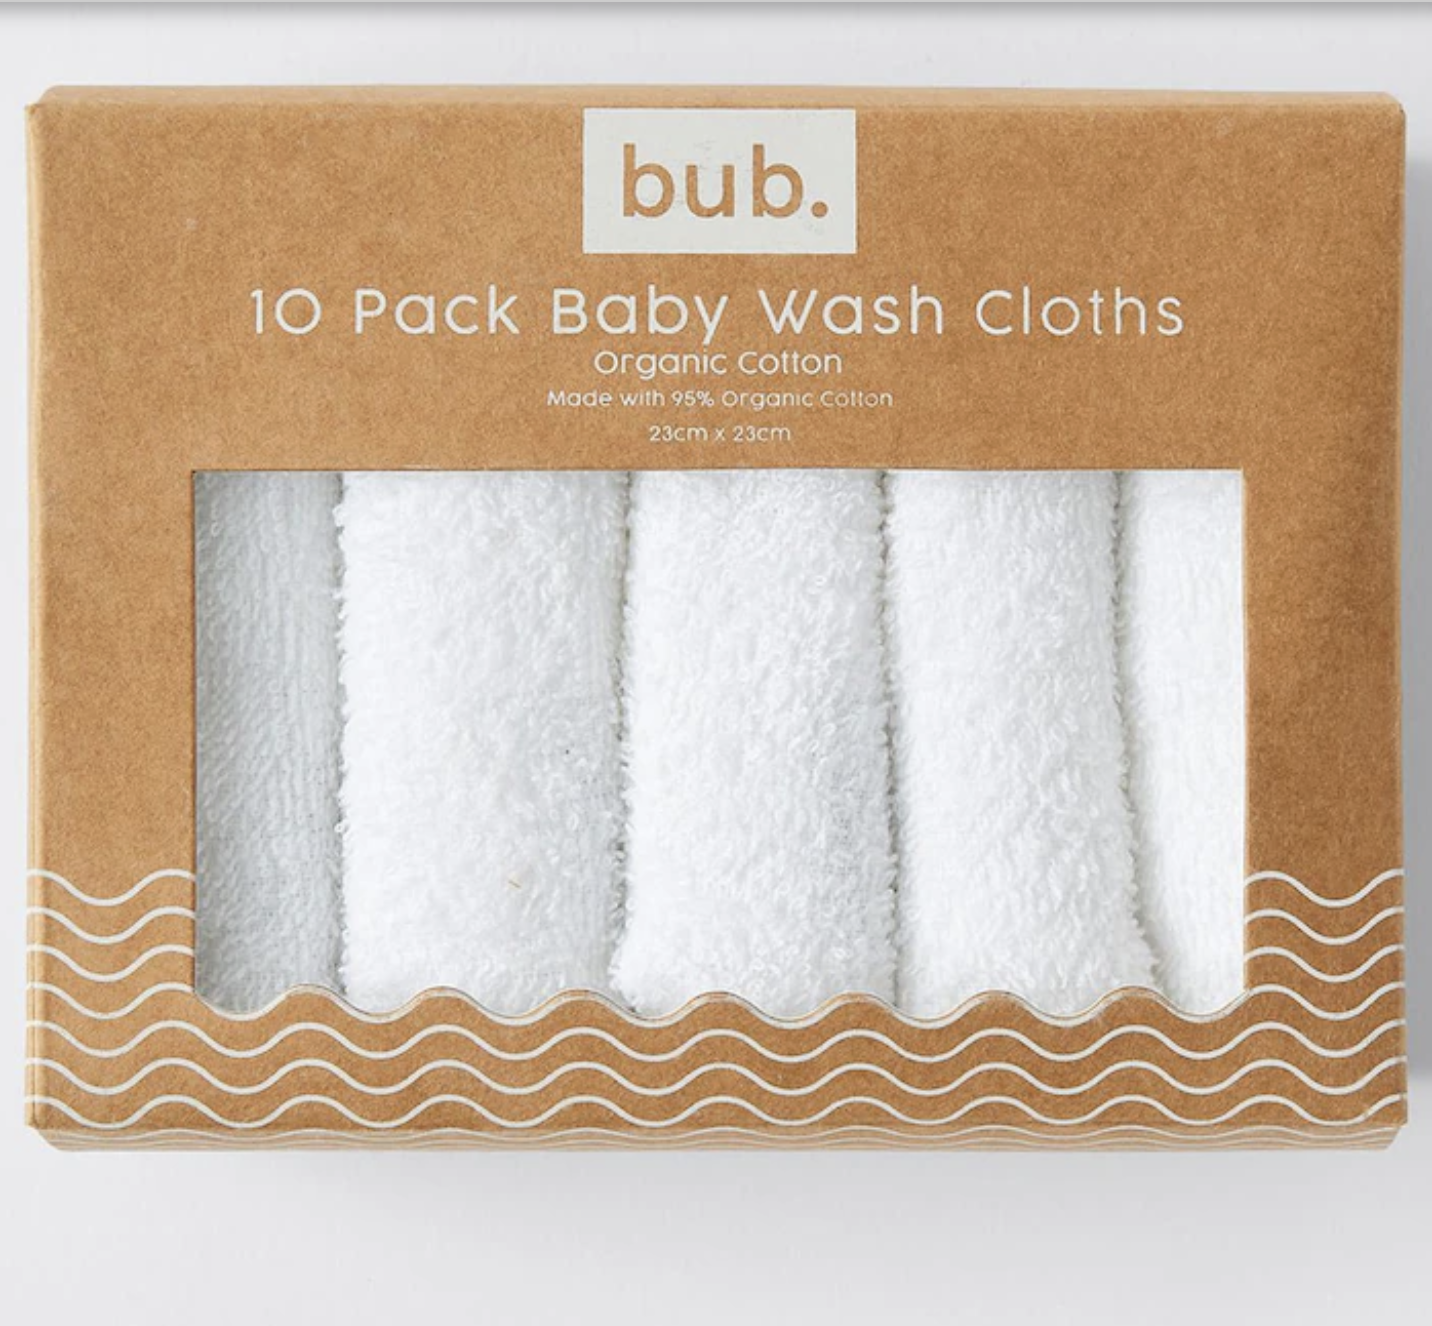 bub. Organic Cotton Baby Wash Cloths 10 Pack - White